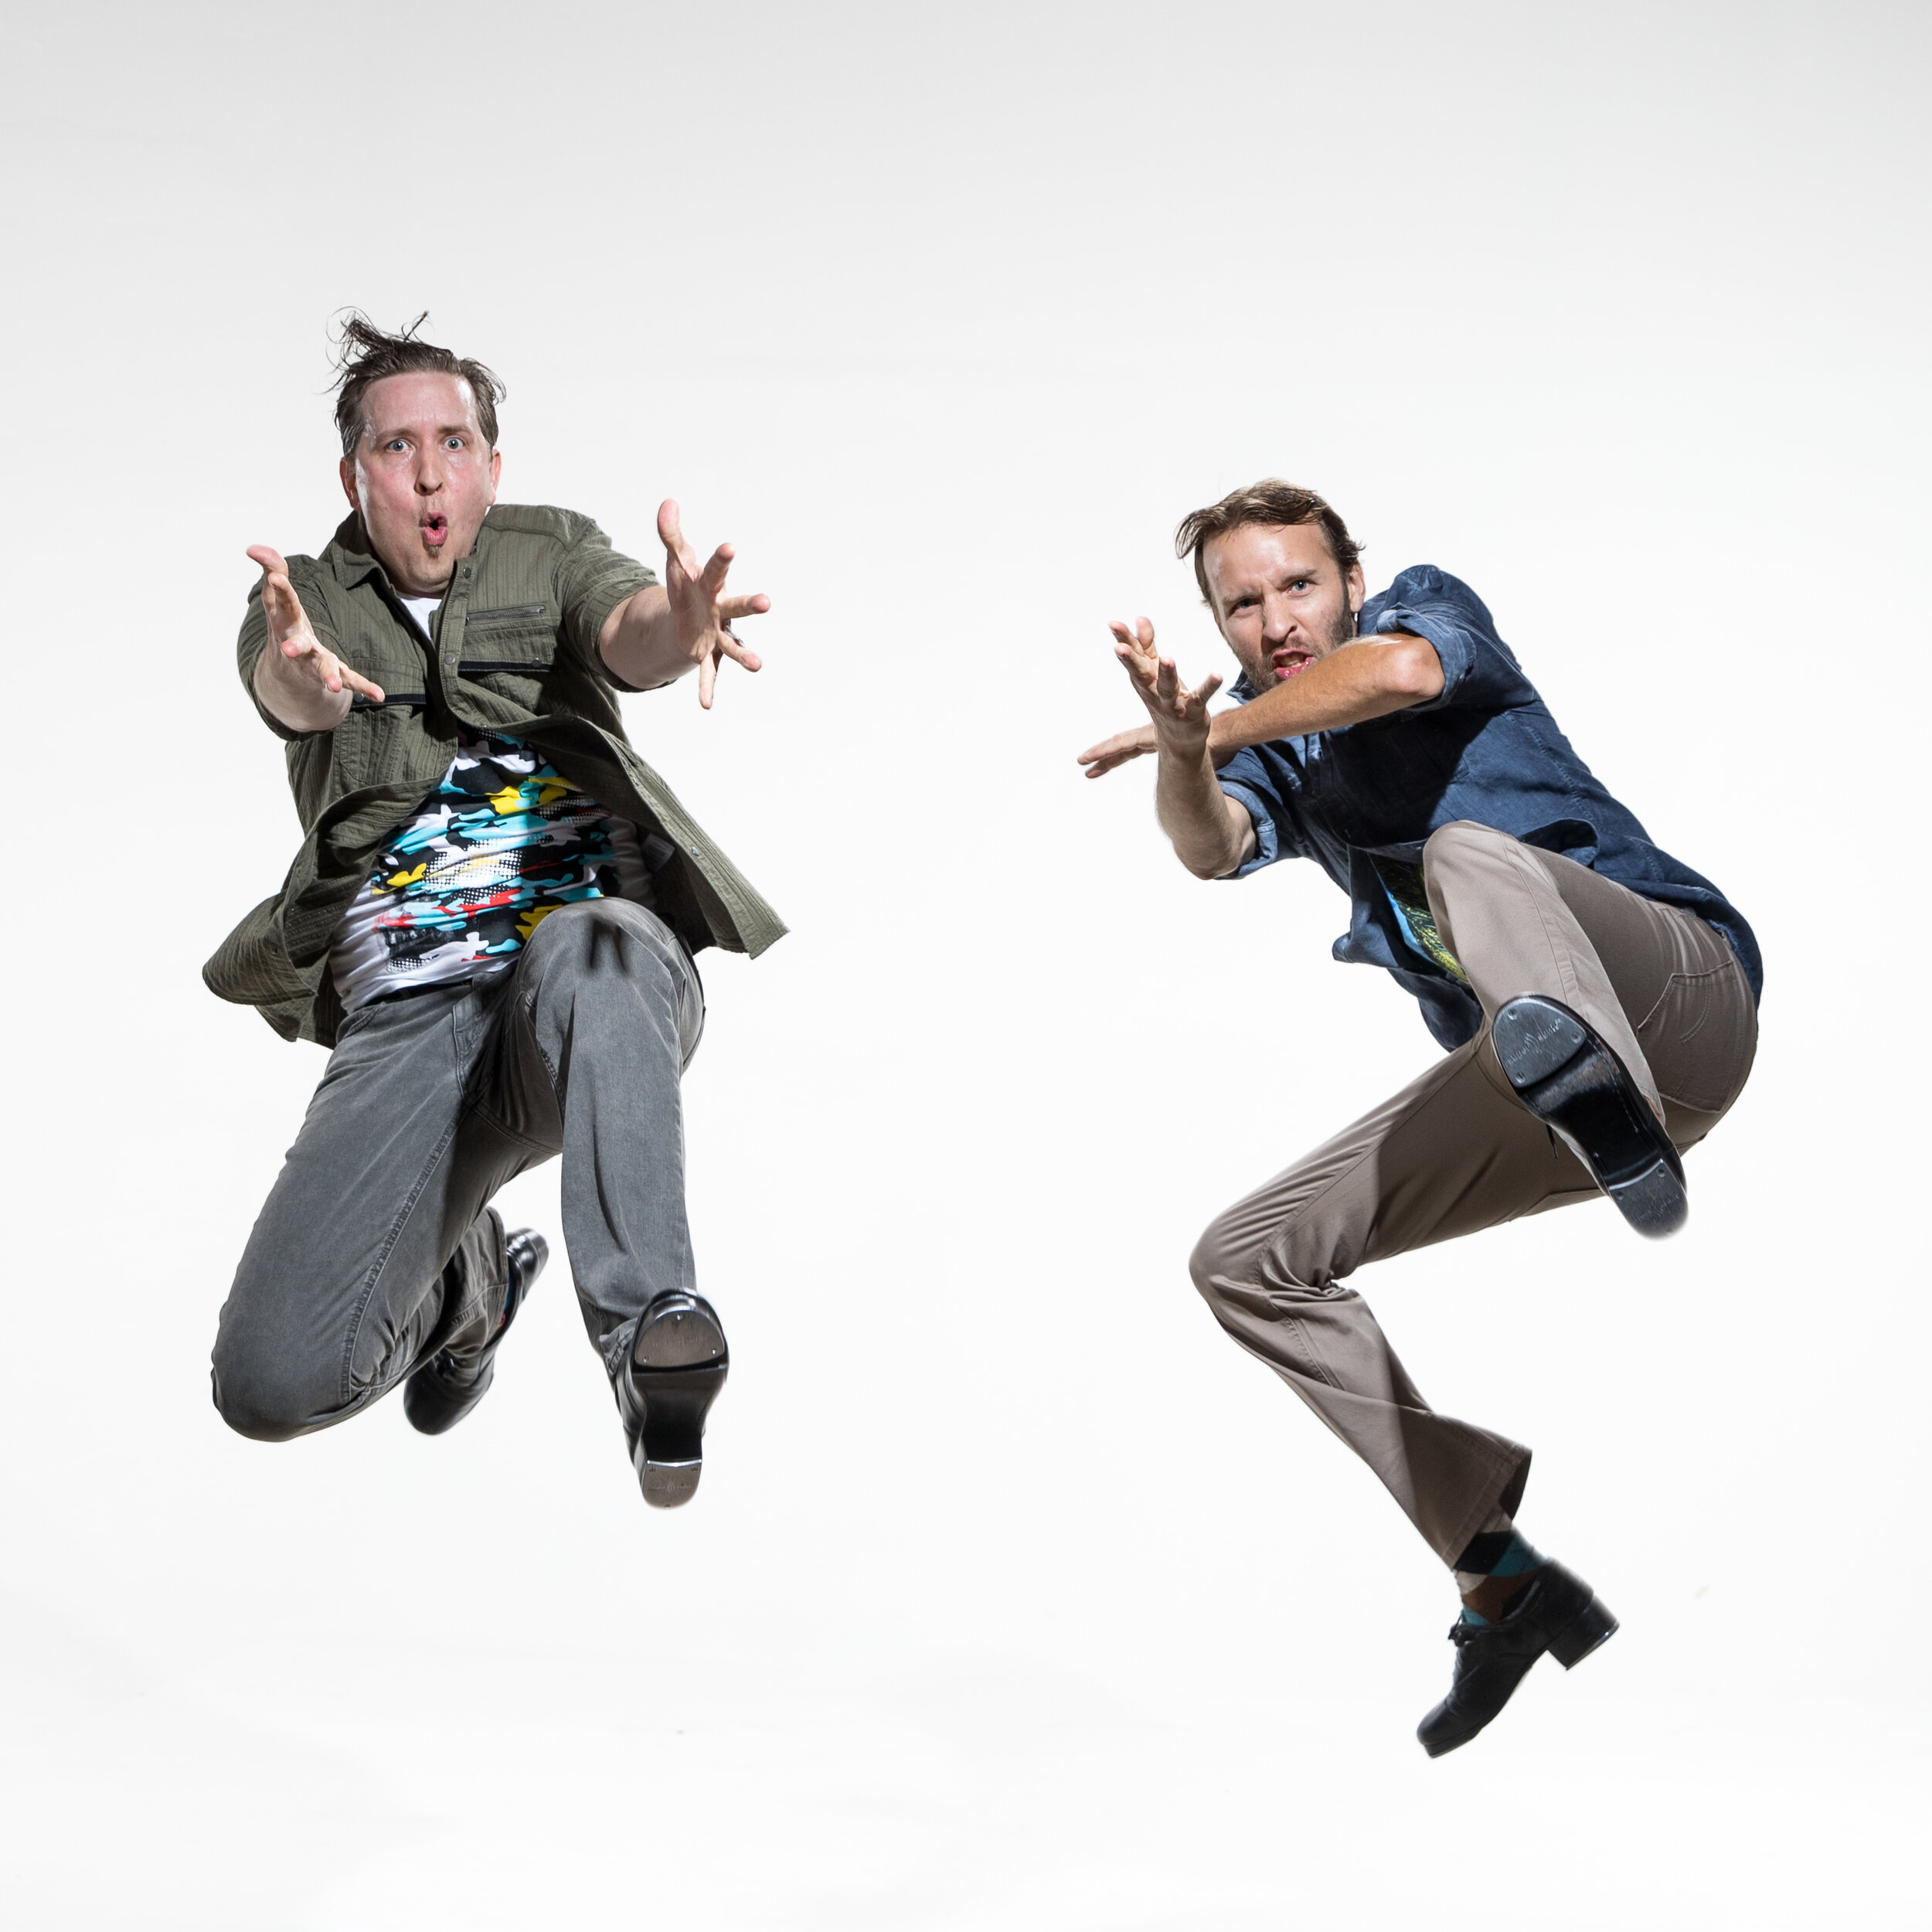 Jumping - Rick Ausland-L, Andy Ausland-R - Photo By Dan Norman.jpg